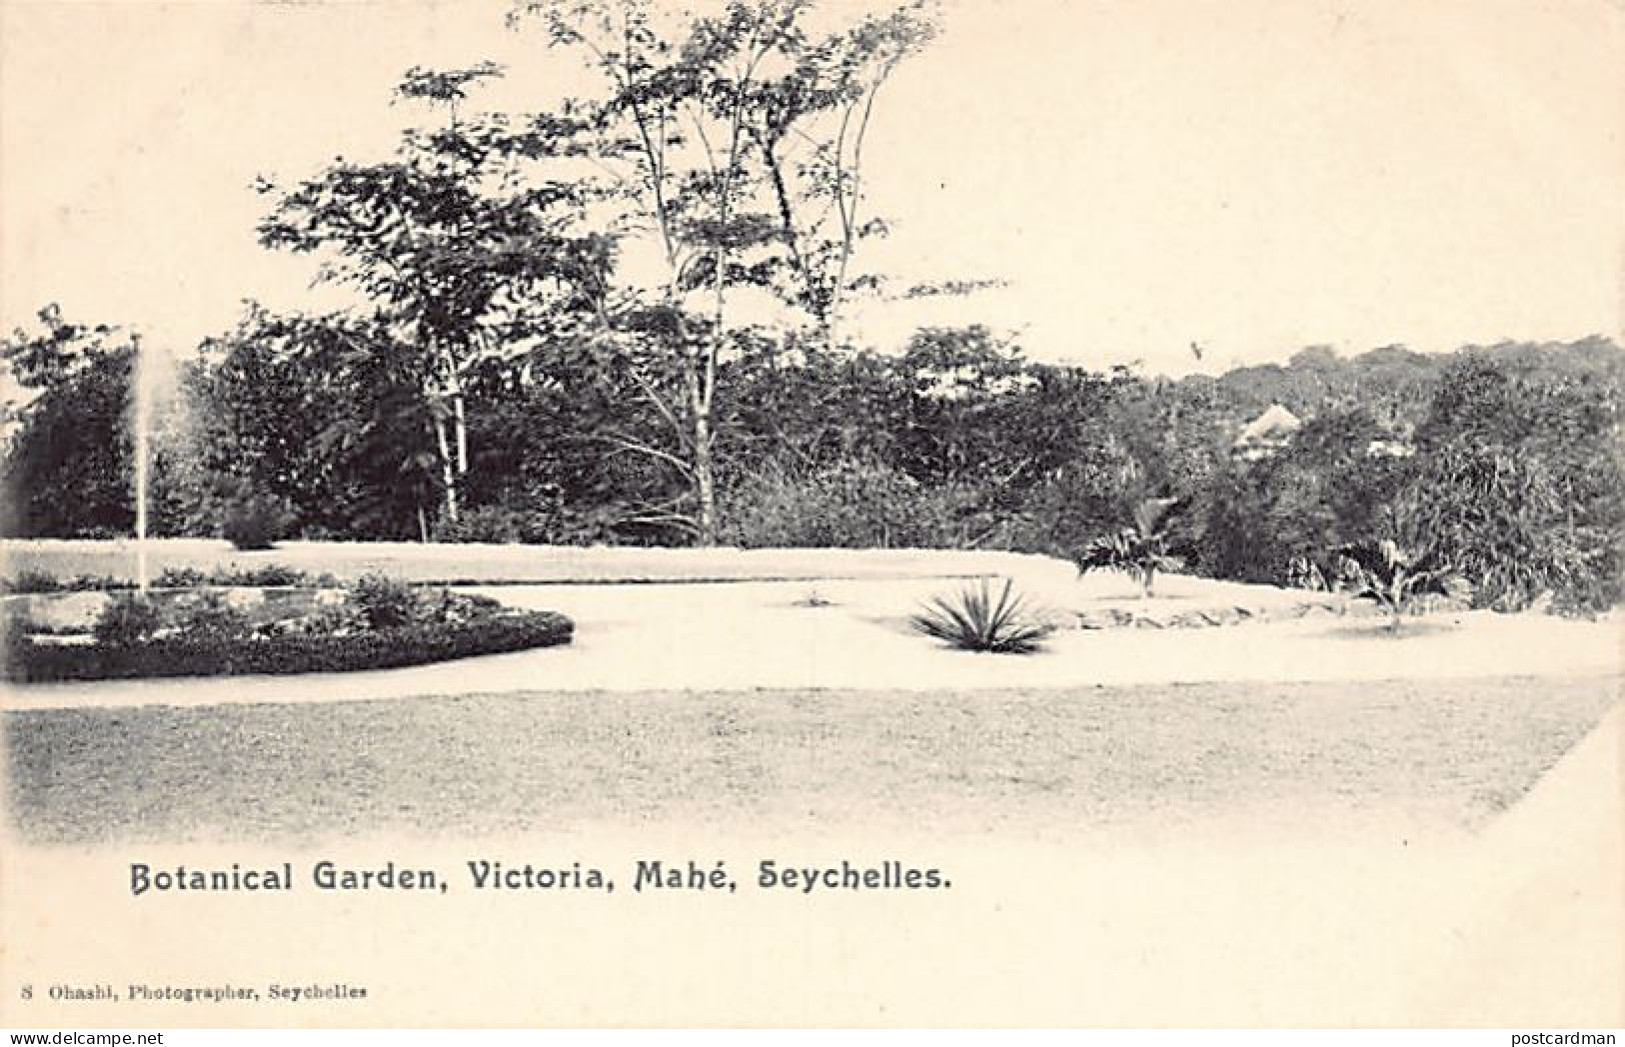 Seychelles - VICTORIA Mahé - Botanic Garden - Publ. S. Ohashi - Seychelles